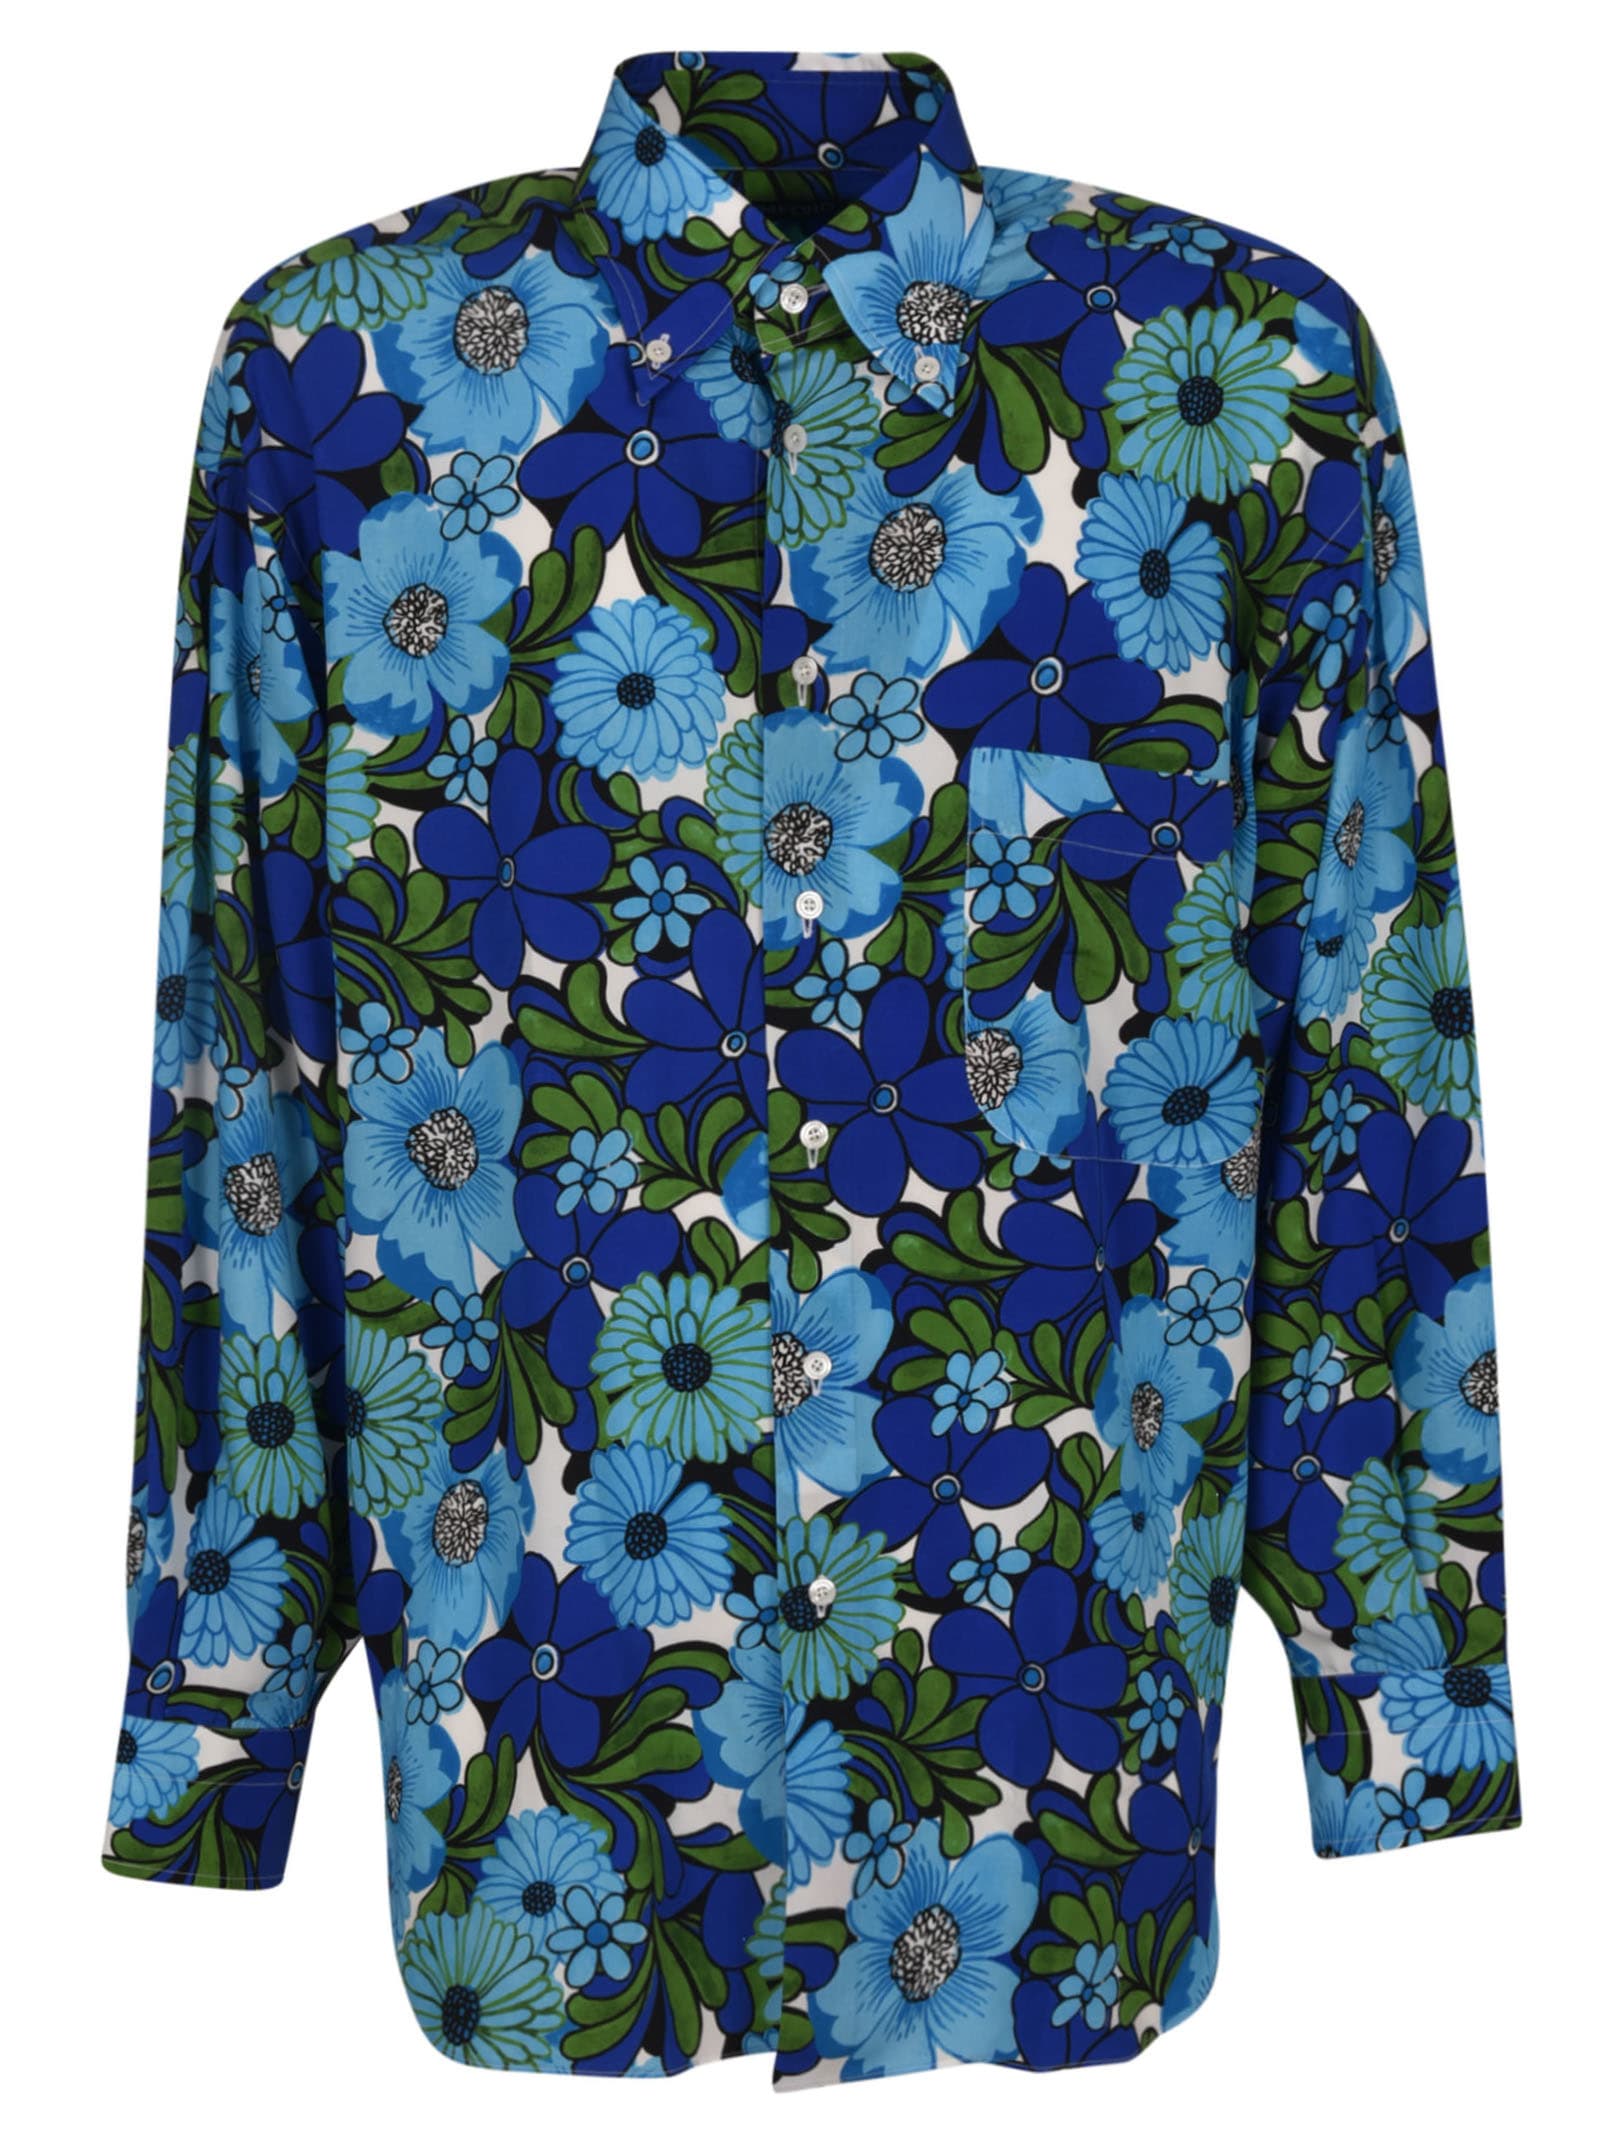 Tom Ford Tropical Print Shirt